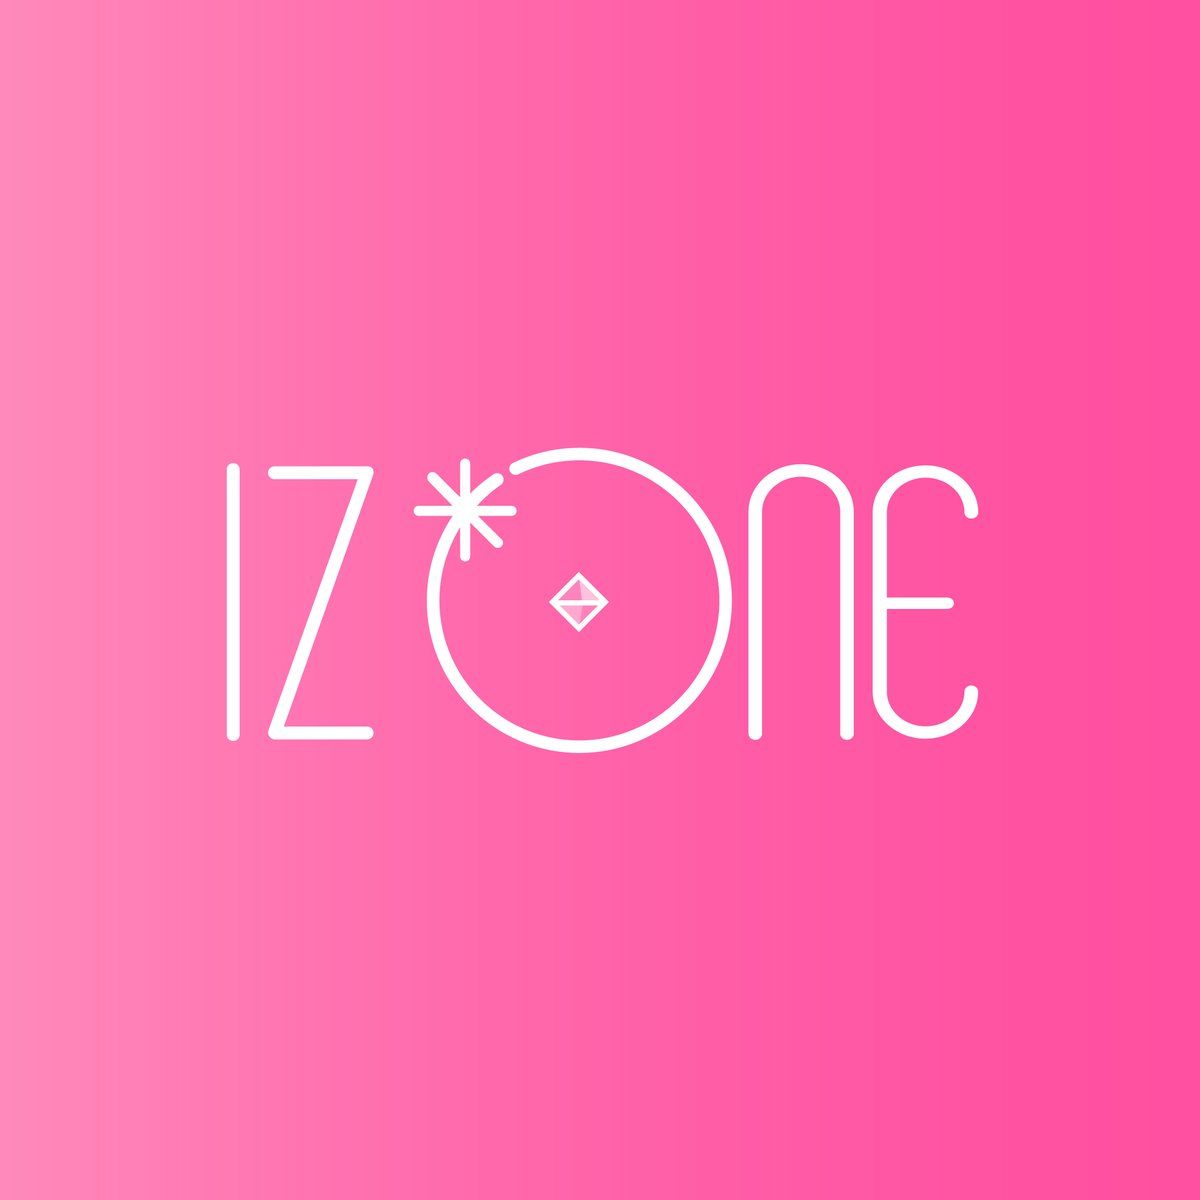 Izone Logo Wallpapers Wallpaper Cave